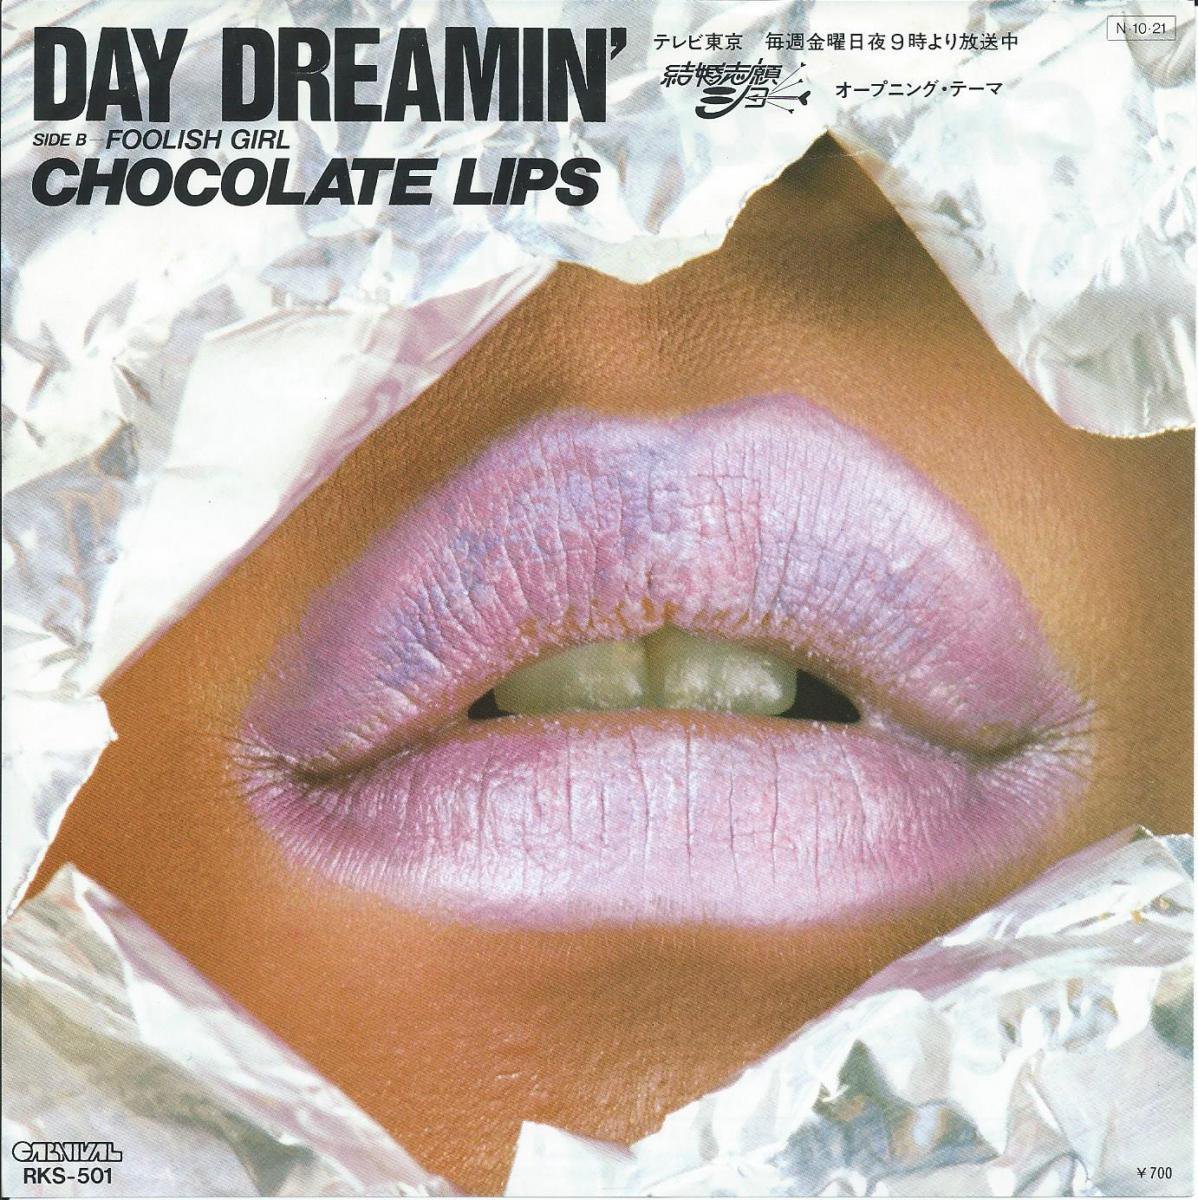 CHOCOLATE LIPS / DAY DREAMIN' / FOOLISH GIRL (7